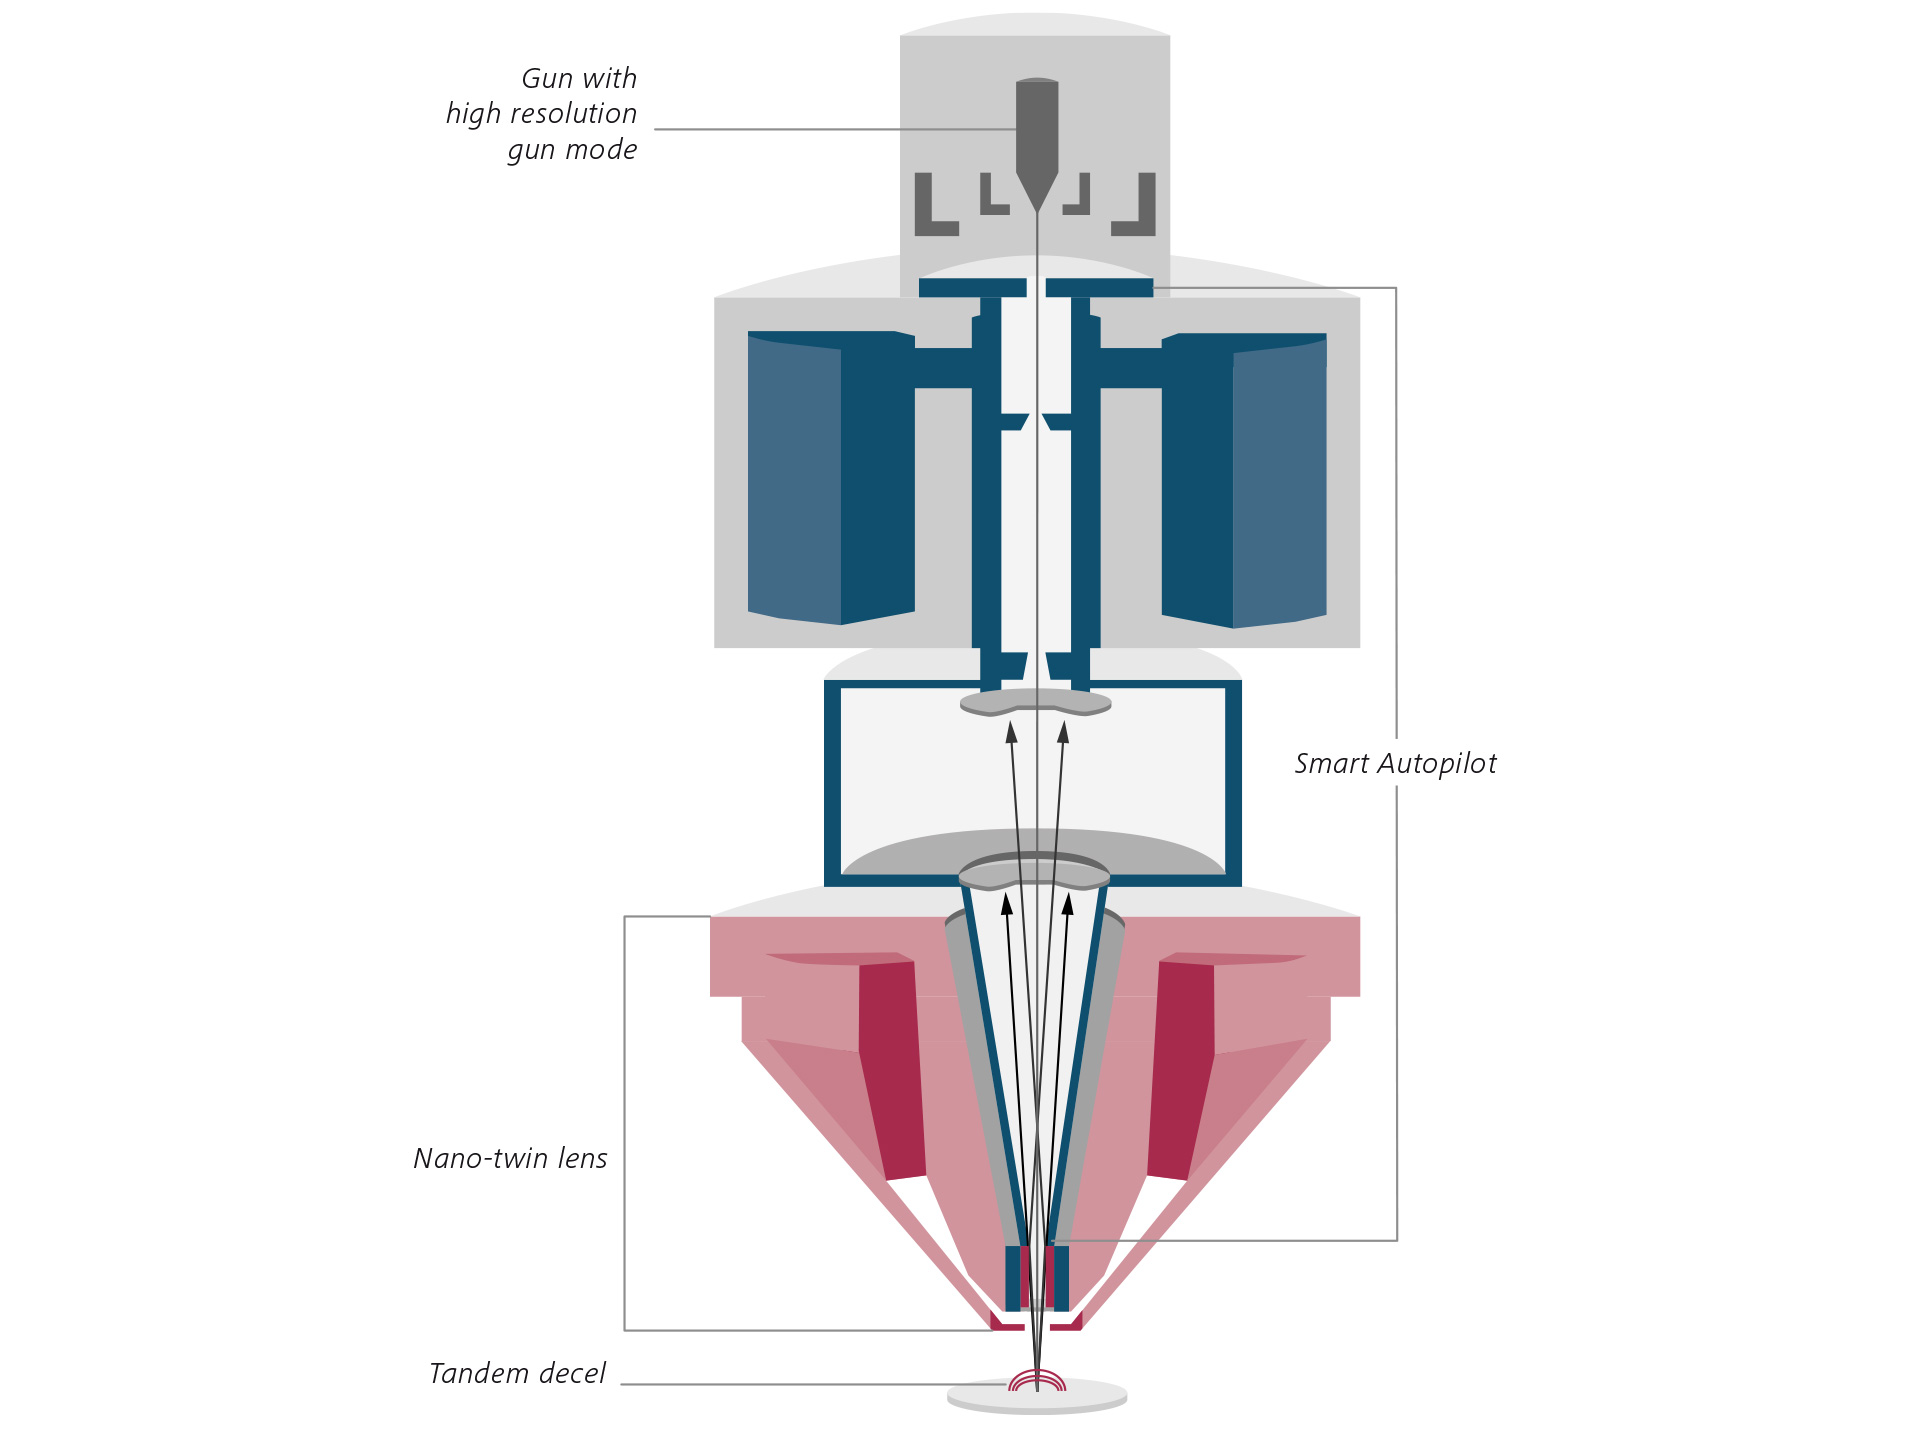 Gemini 3カラムの新しい光学設計。GeminiSEM 560の断面模式図。ナノツインレンズ（赤）、Smart Autopilot（青）。 